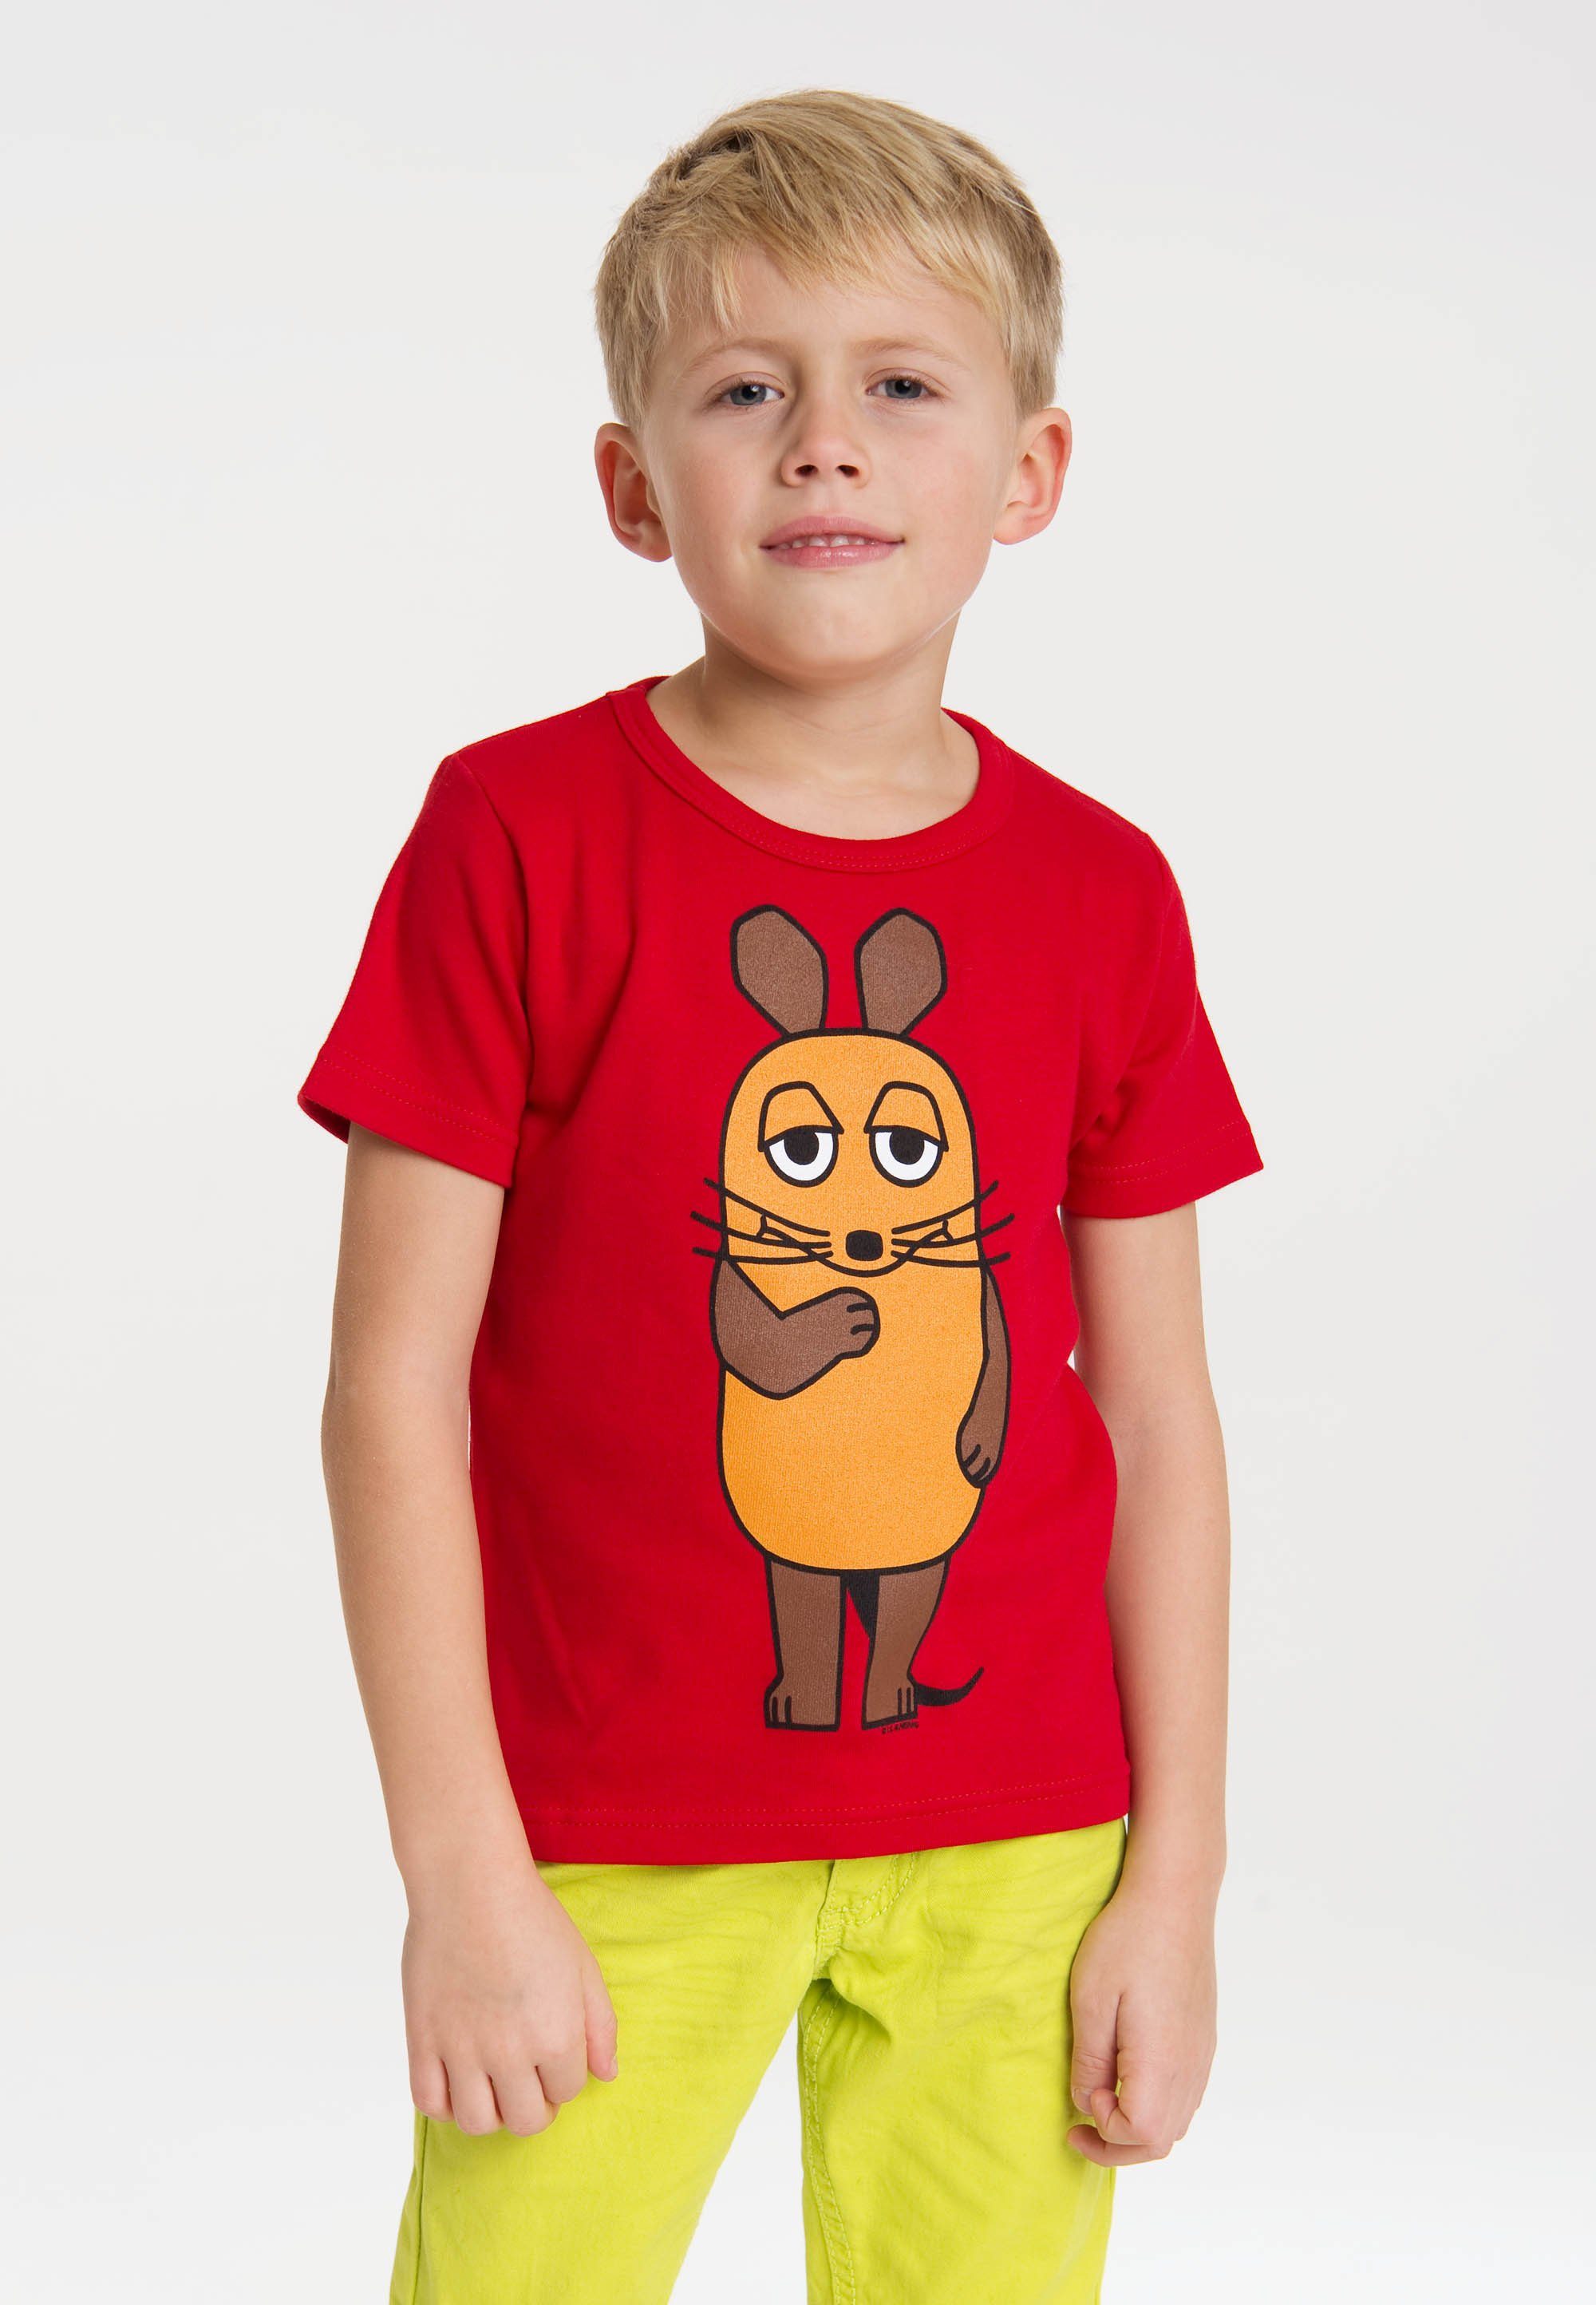 Maus LOGOSHIRT rot lizenziertem Originaldesign T-Shirt Die mit